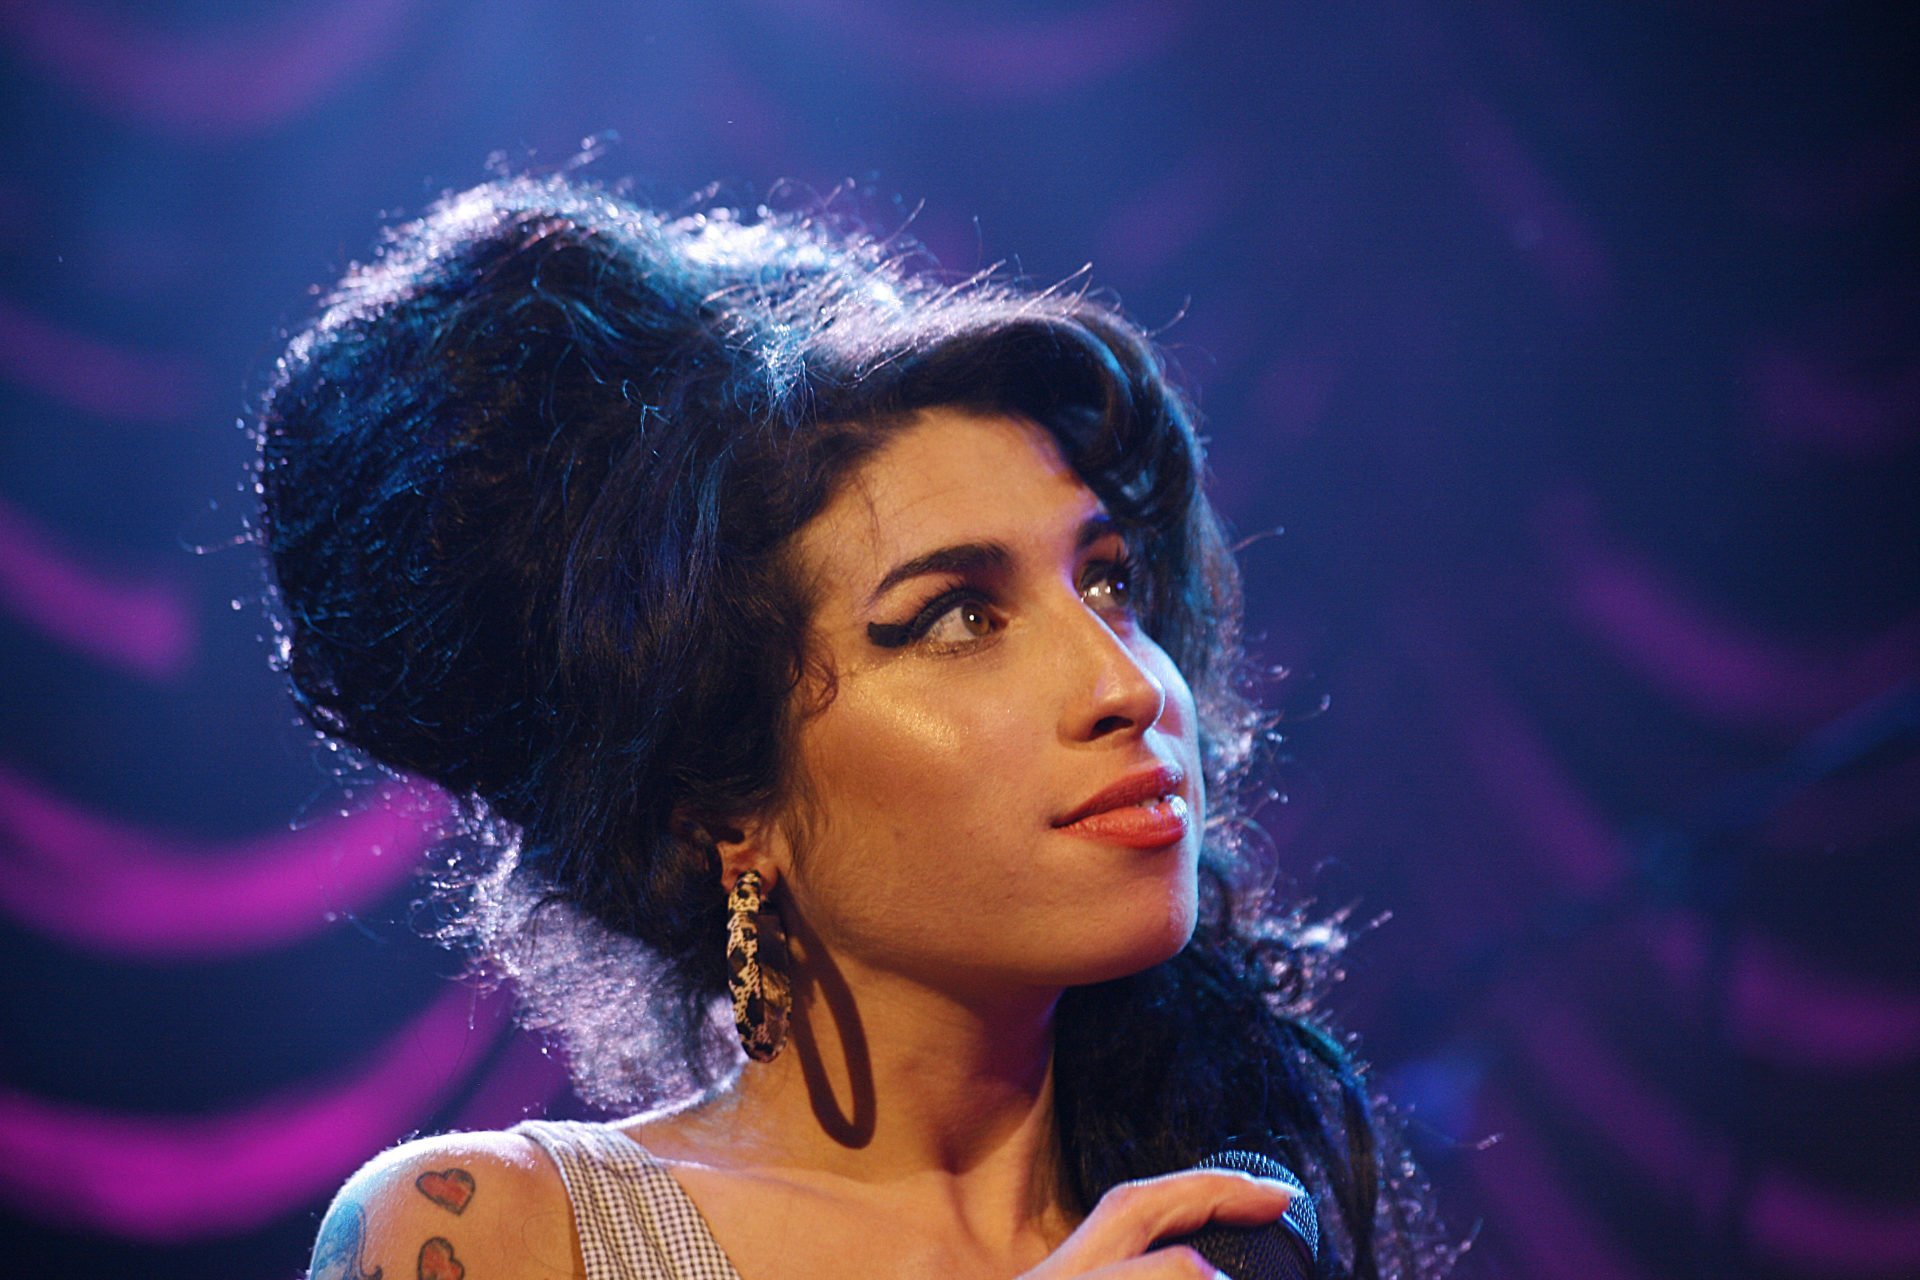 Amy Winehouse's love for iconic singer left a mark on her debut album